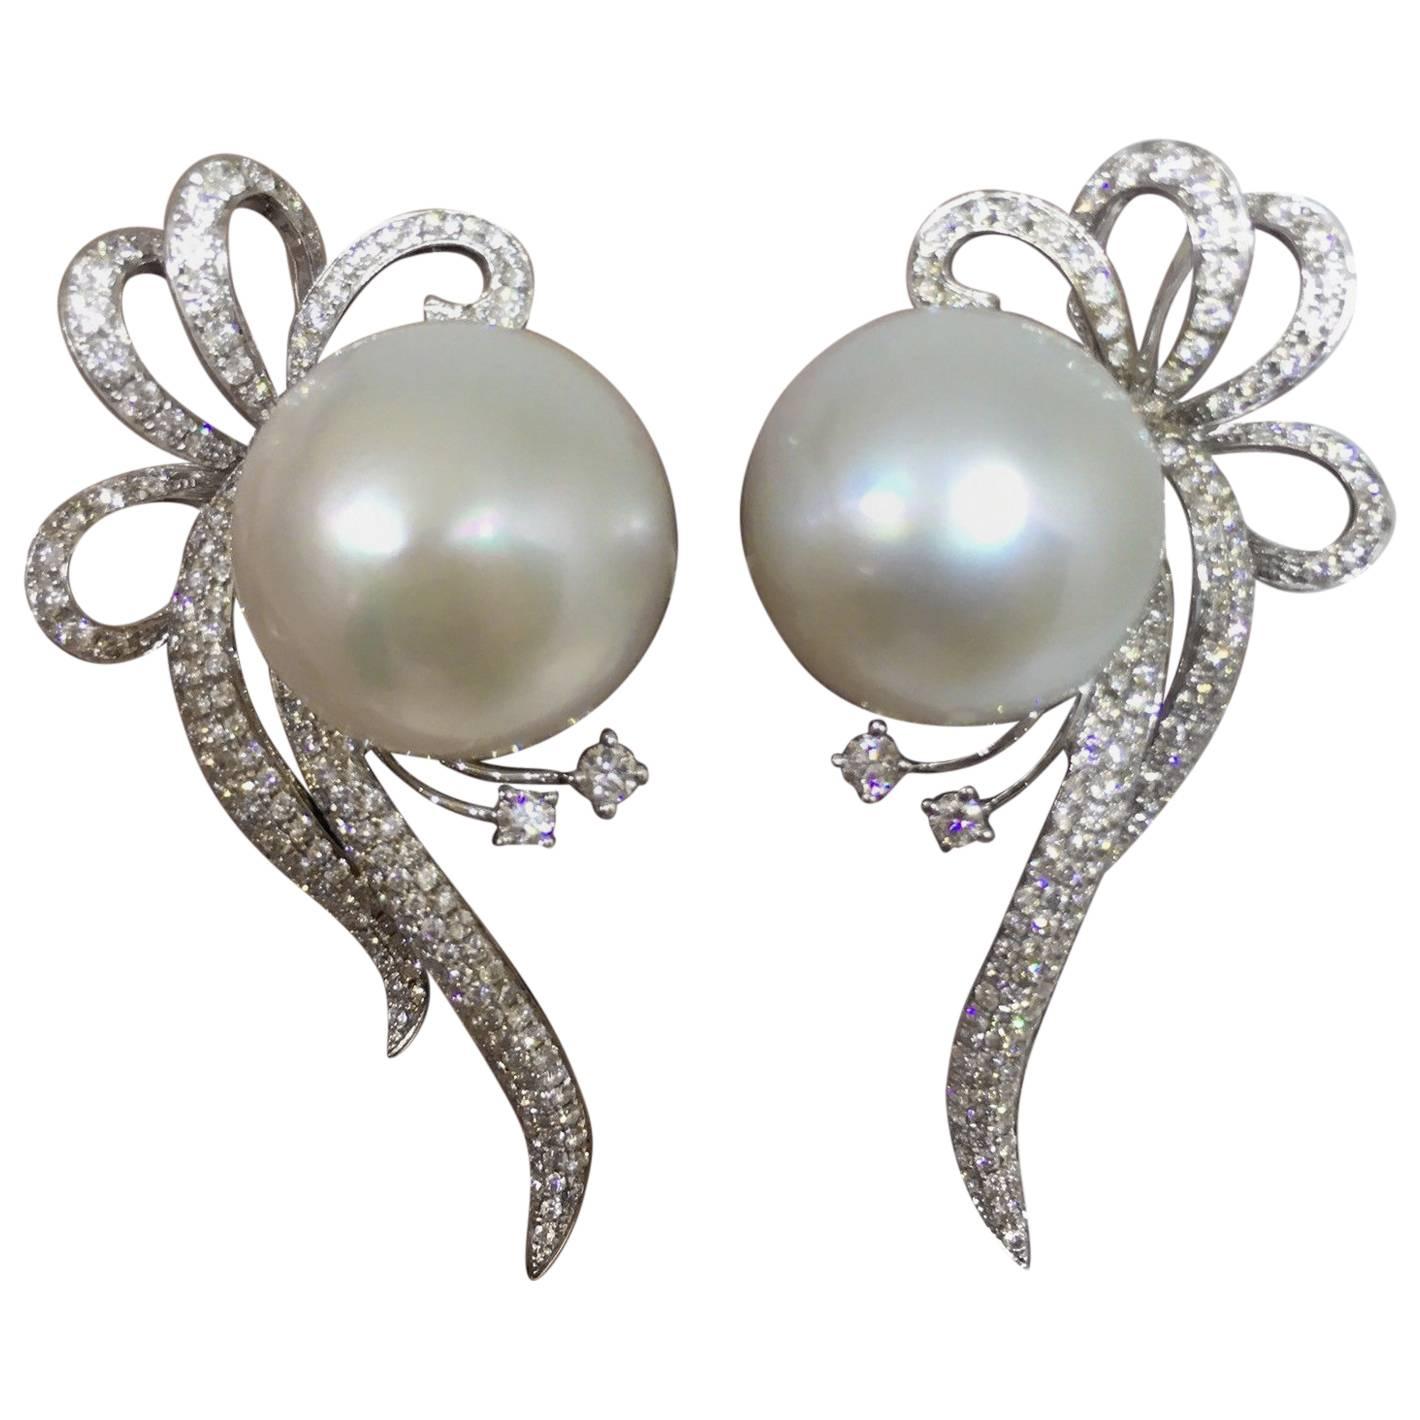 Stunning 18 Karat Gold 3.56 Carat Diamond Cultured Pearl Earrings